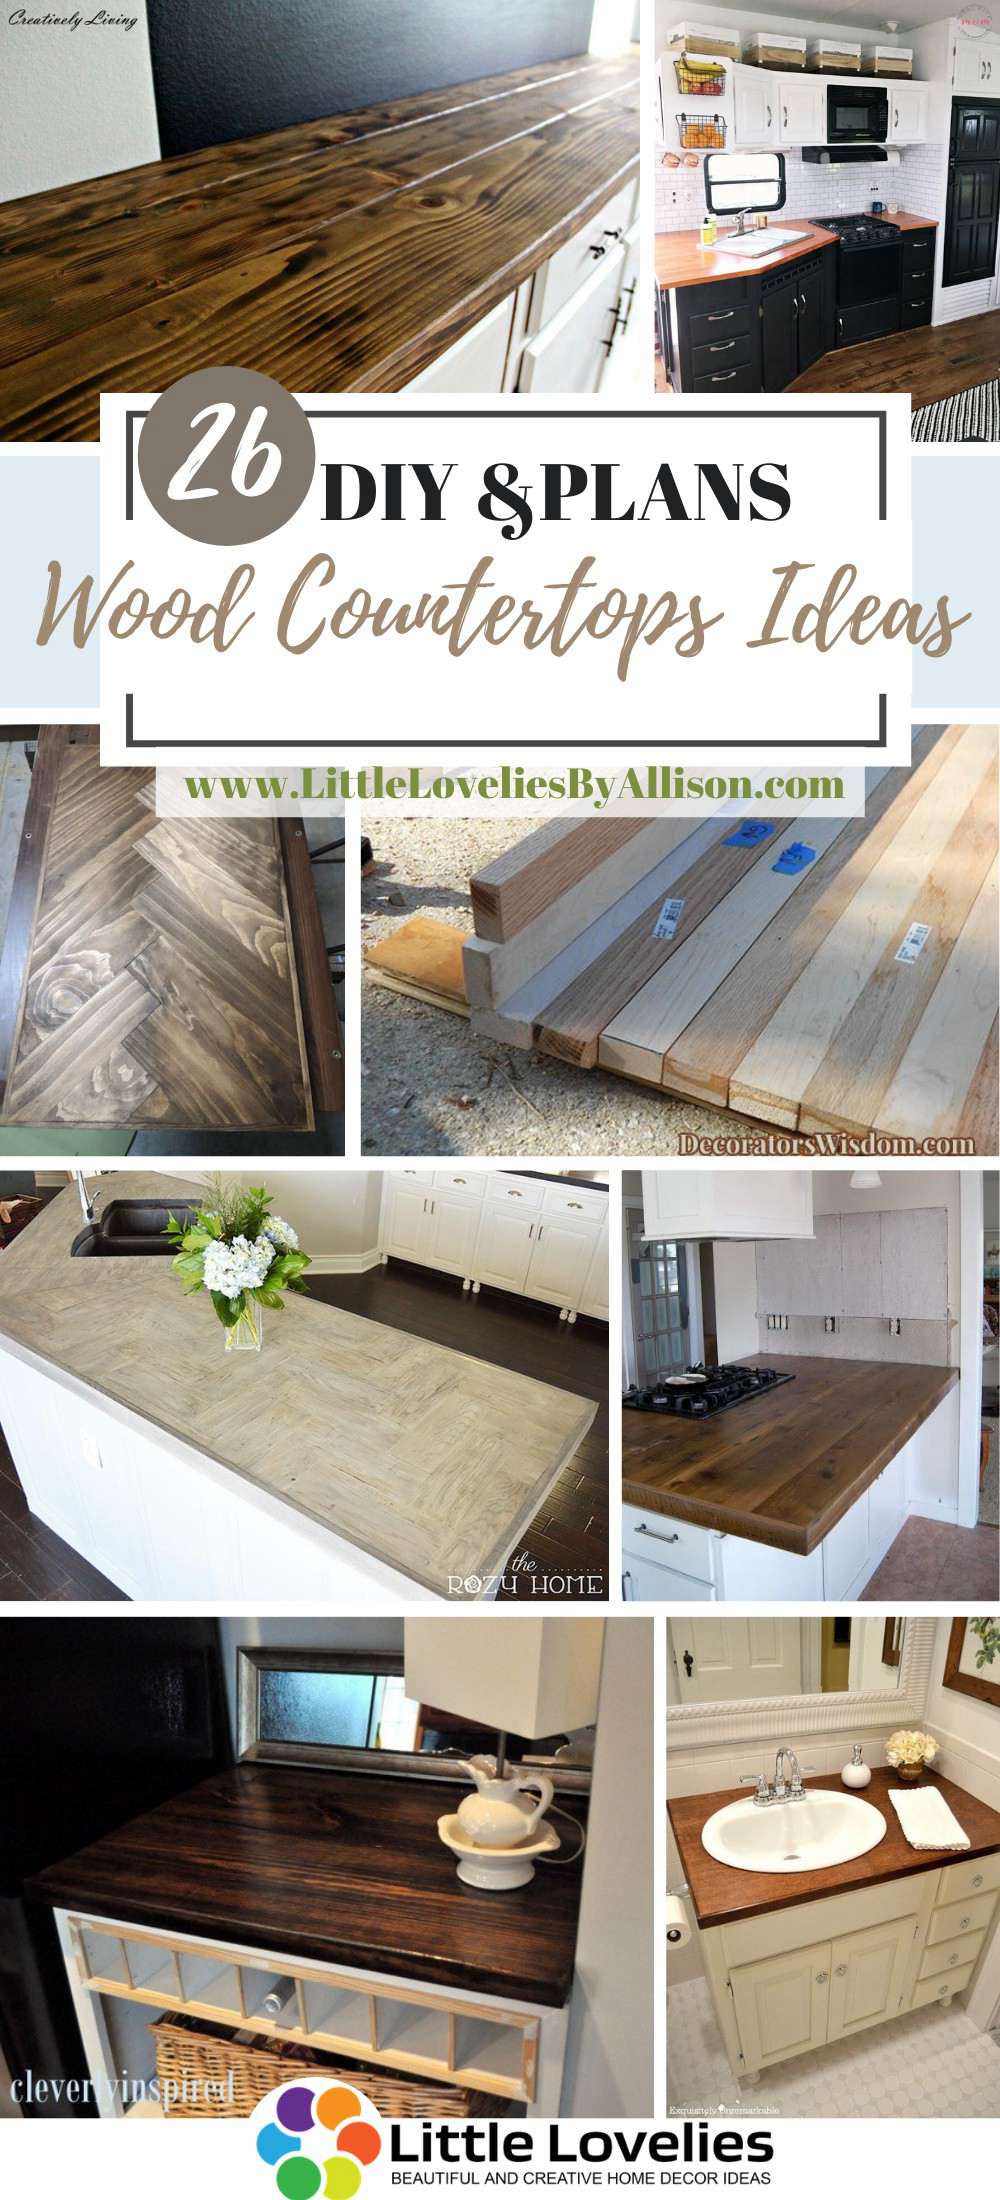 26 Diy Wood Countertops Ideas Plans, How To Diy Wood Countertops